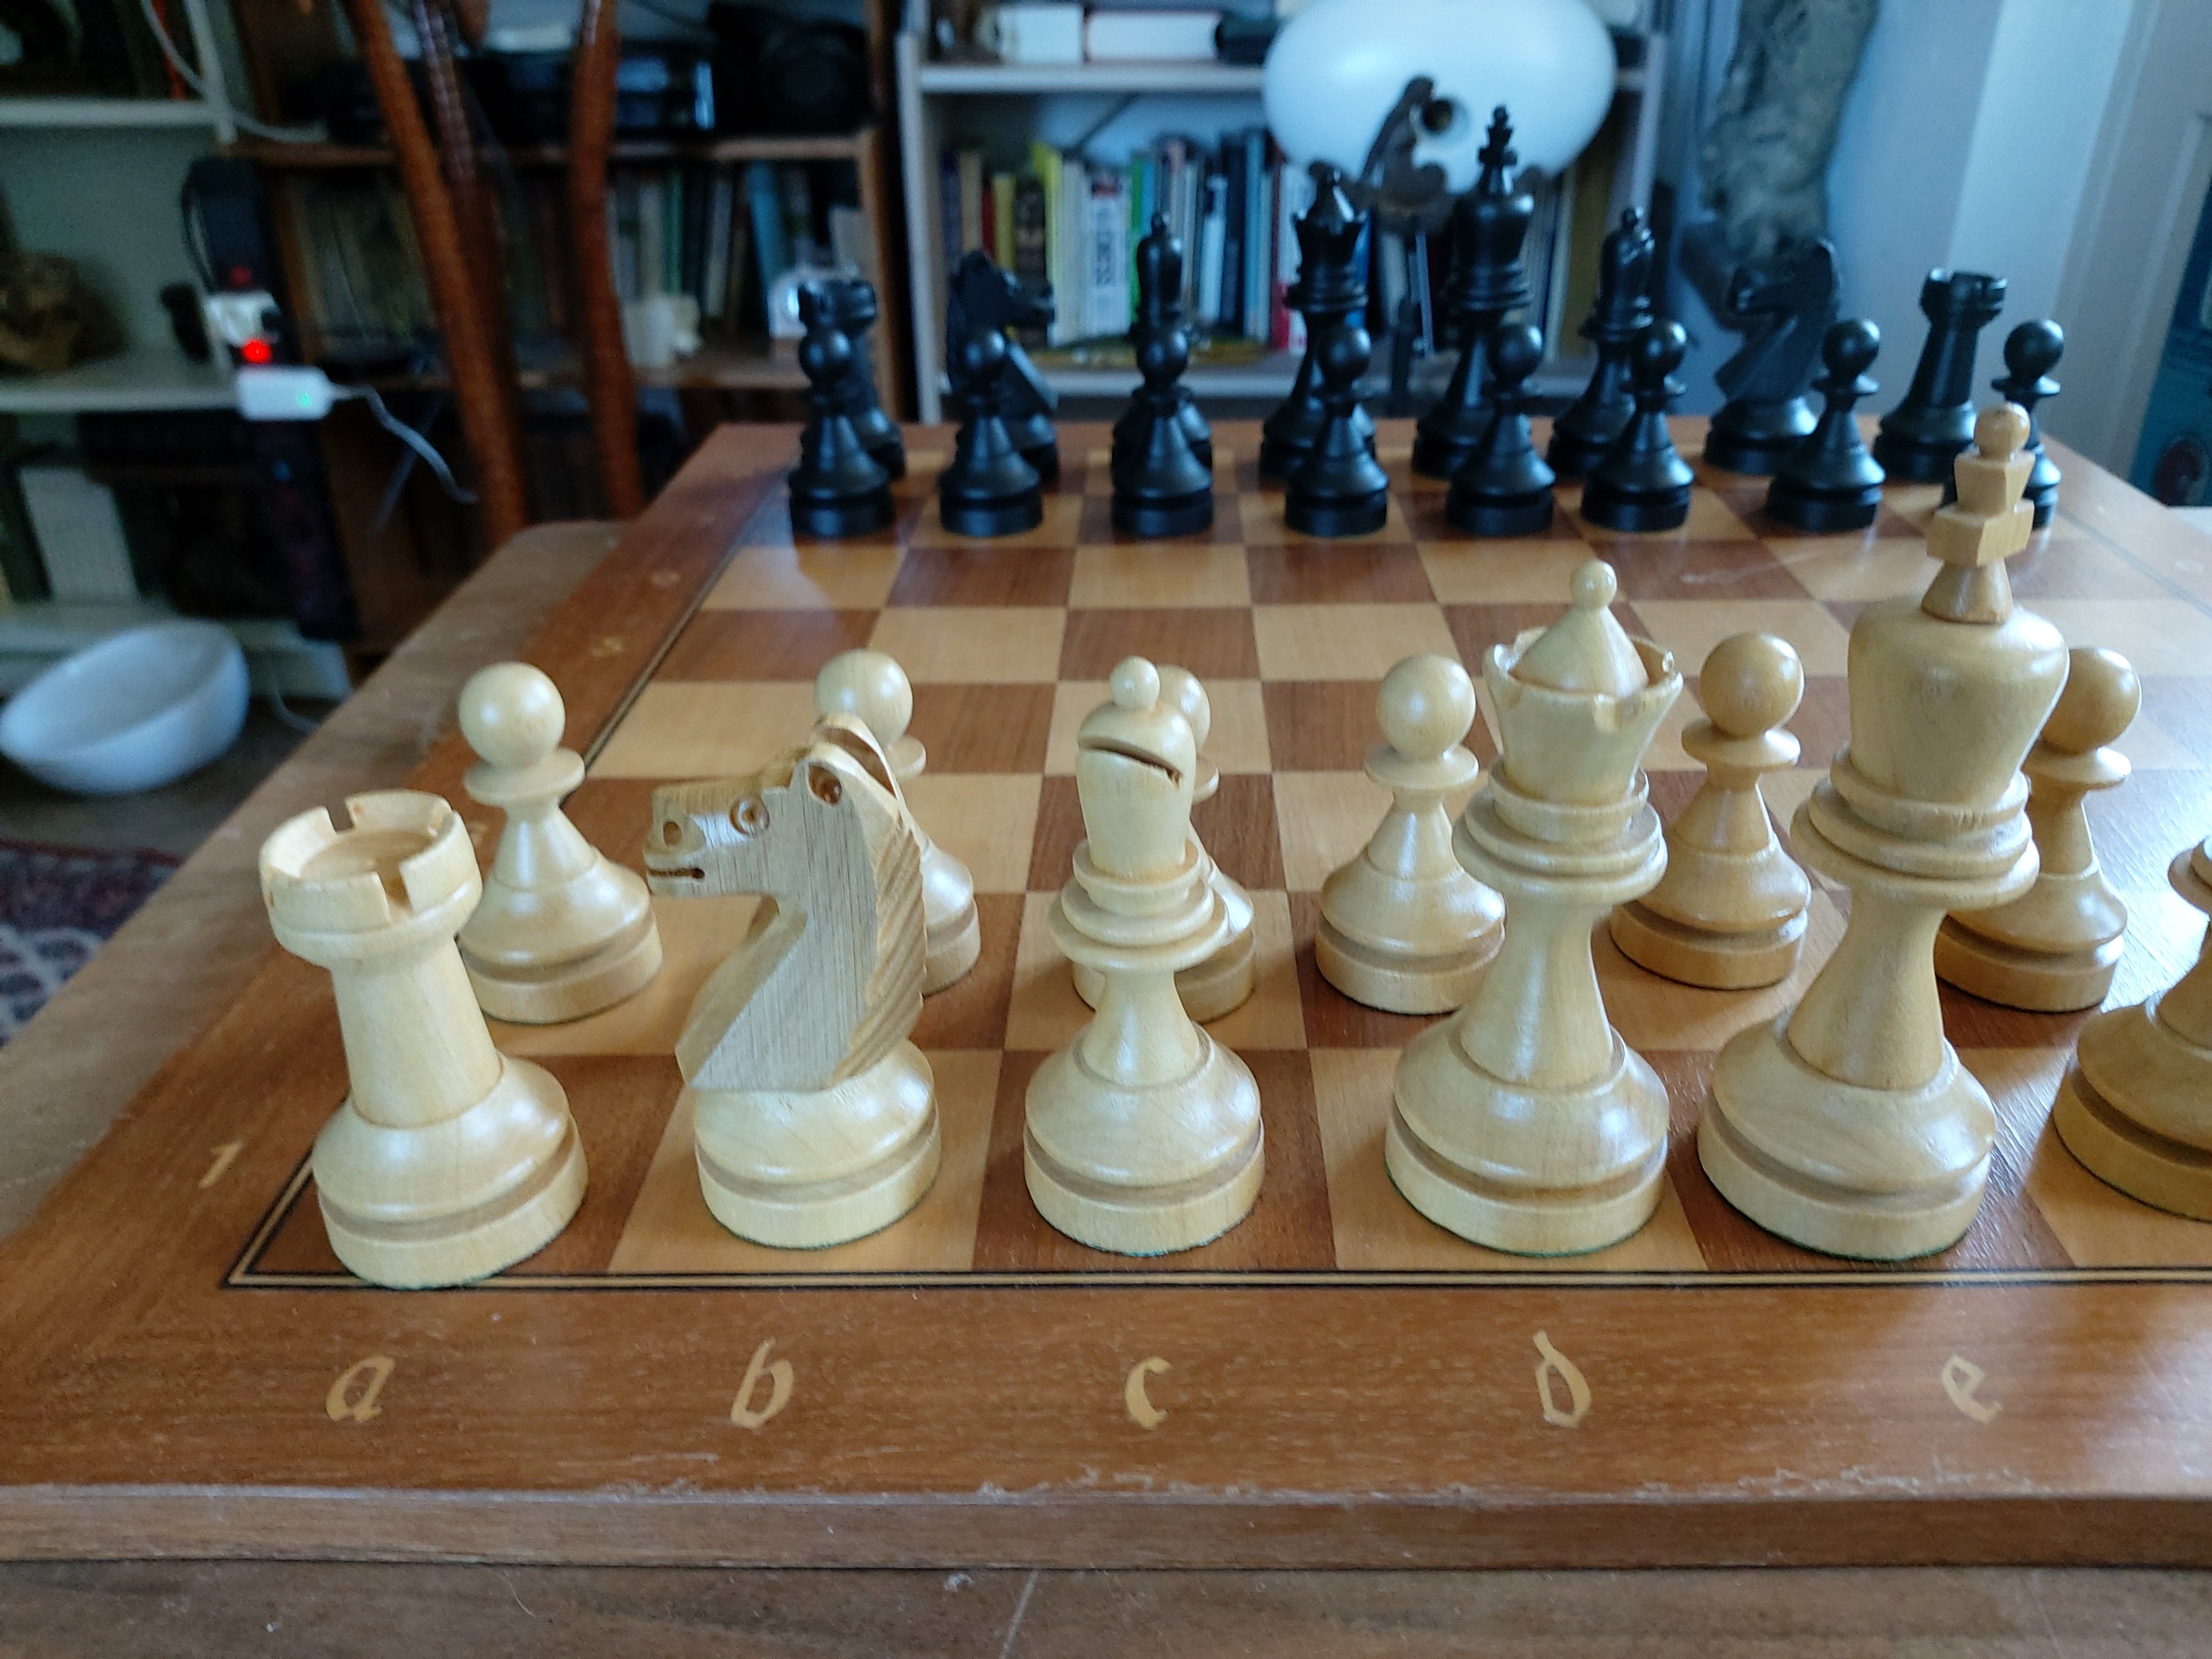 CCB - Cut Chess Brasil